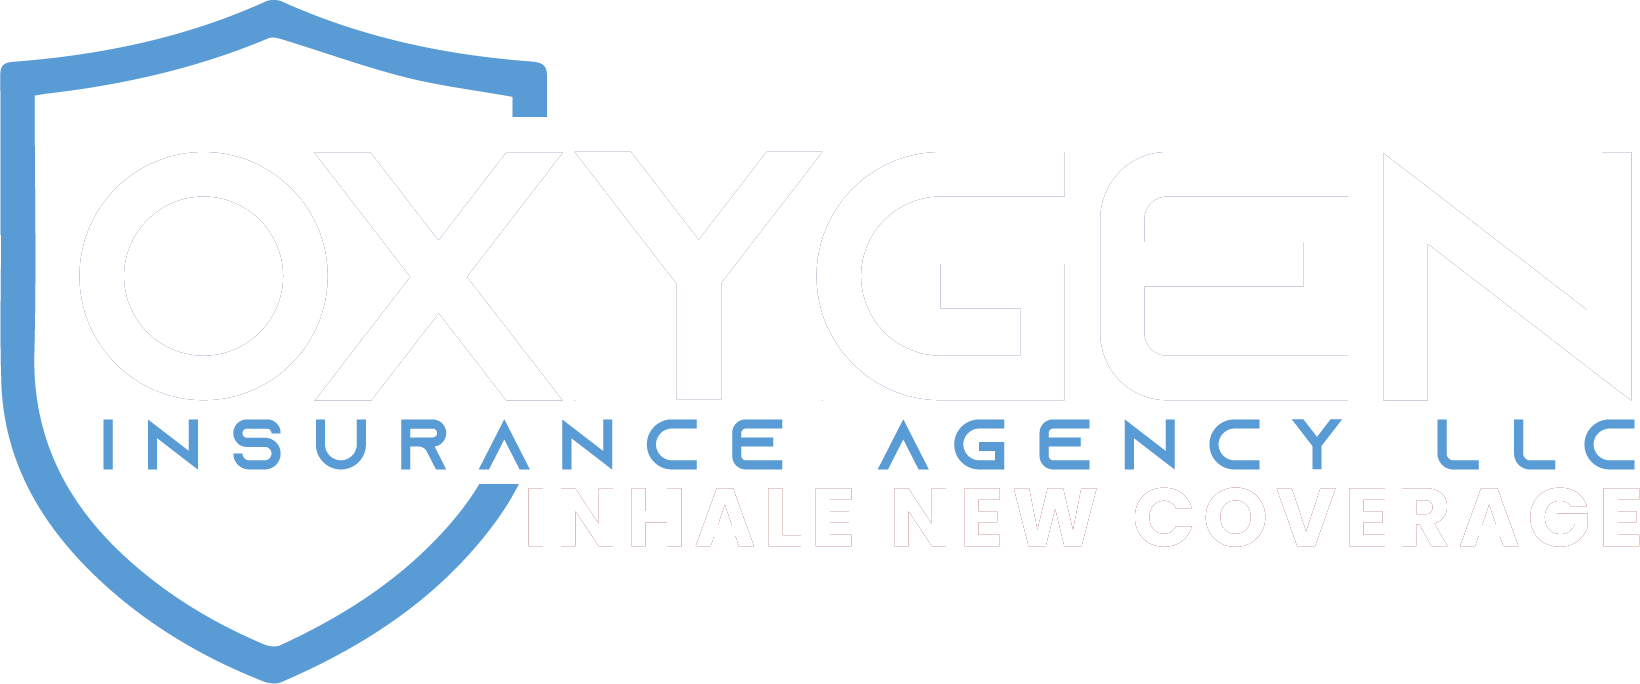 Oxygen Insurance Agency logo white